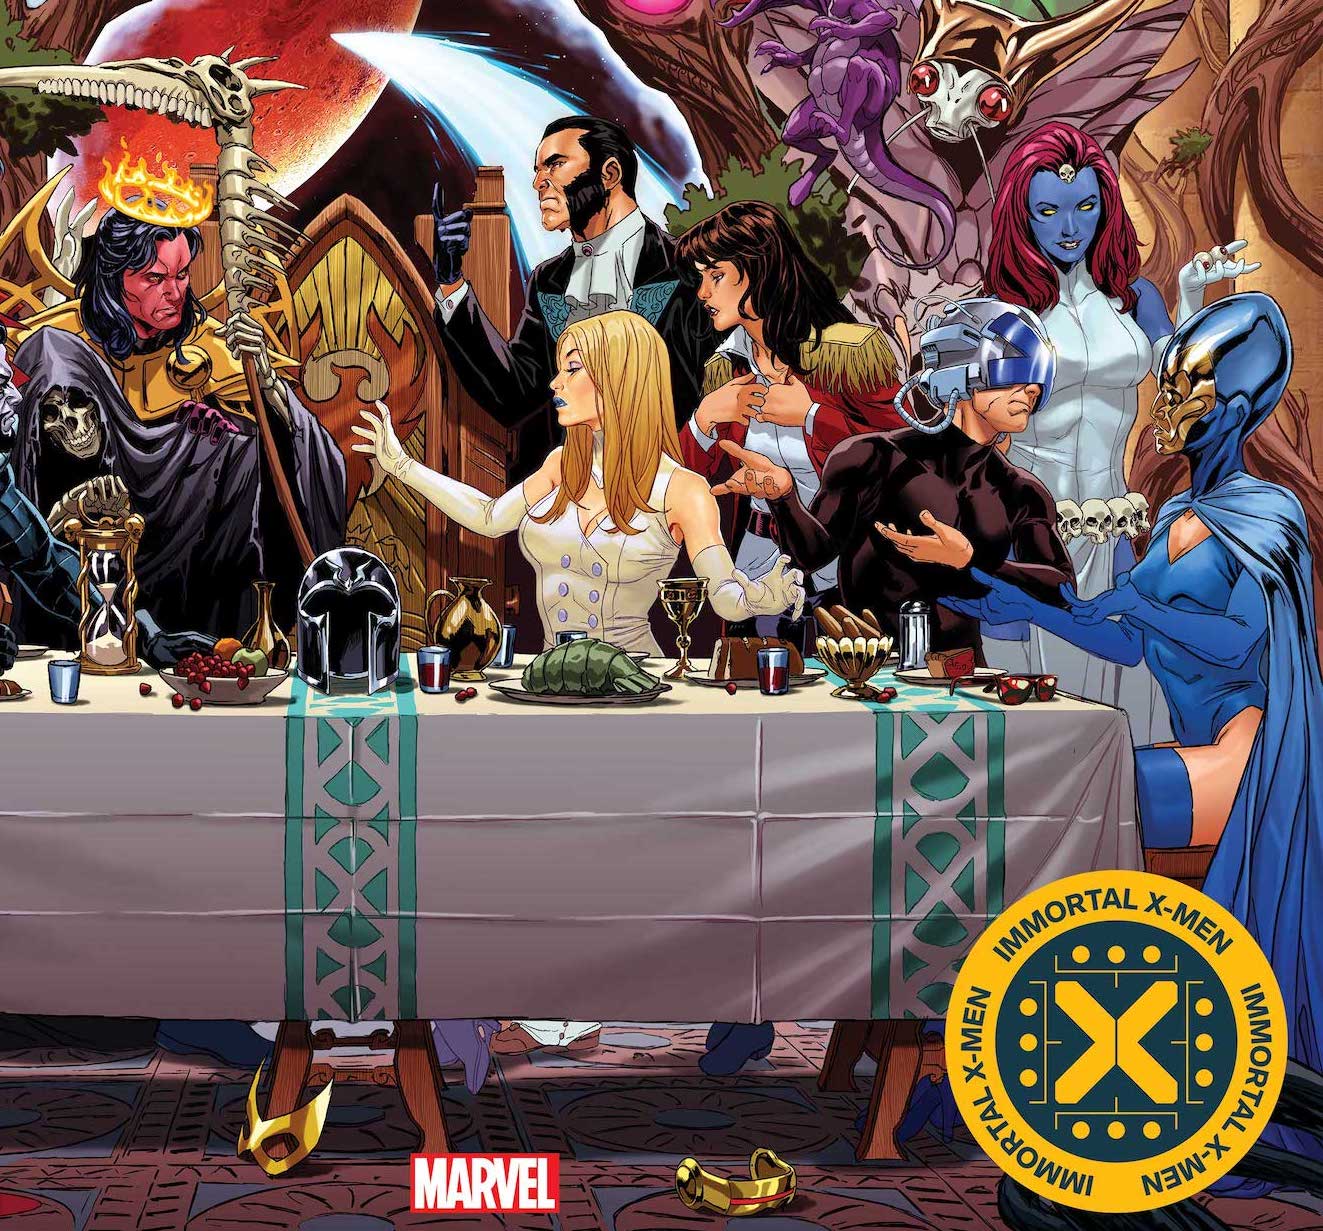 Marvel reveals details on new 'Immortal X-Men' series featuring Kieron Gillen & Lucas Werneck